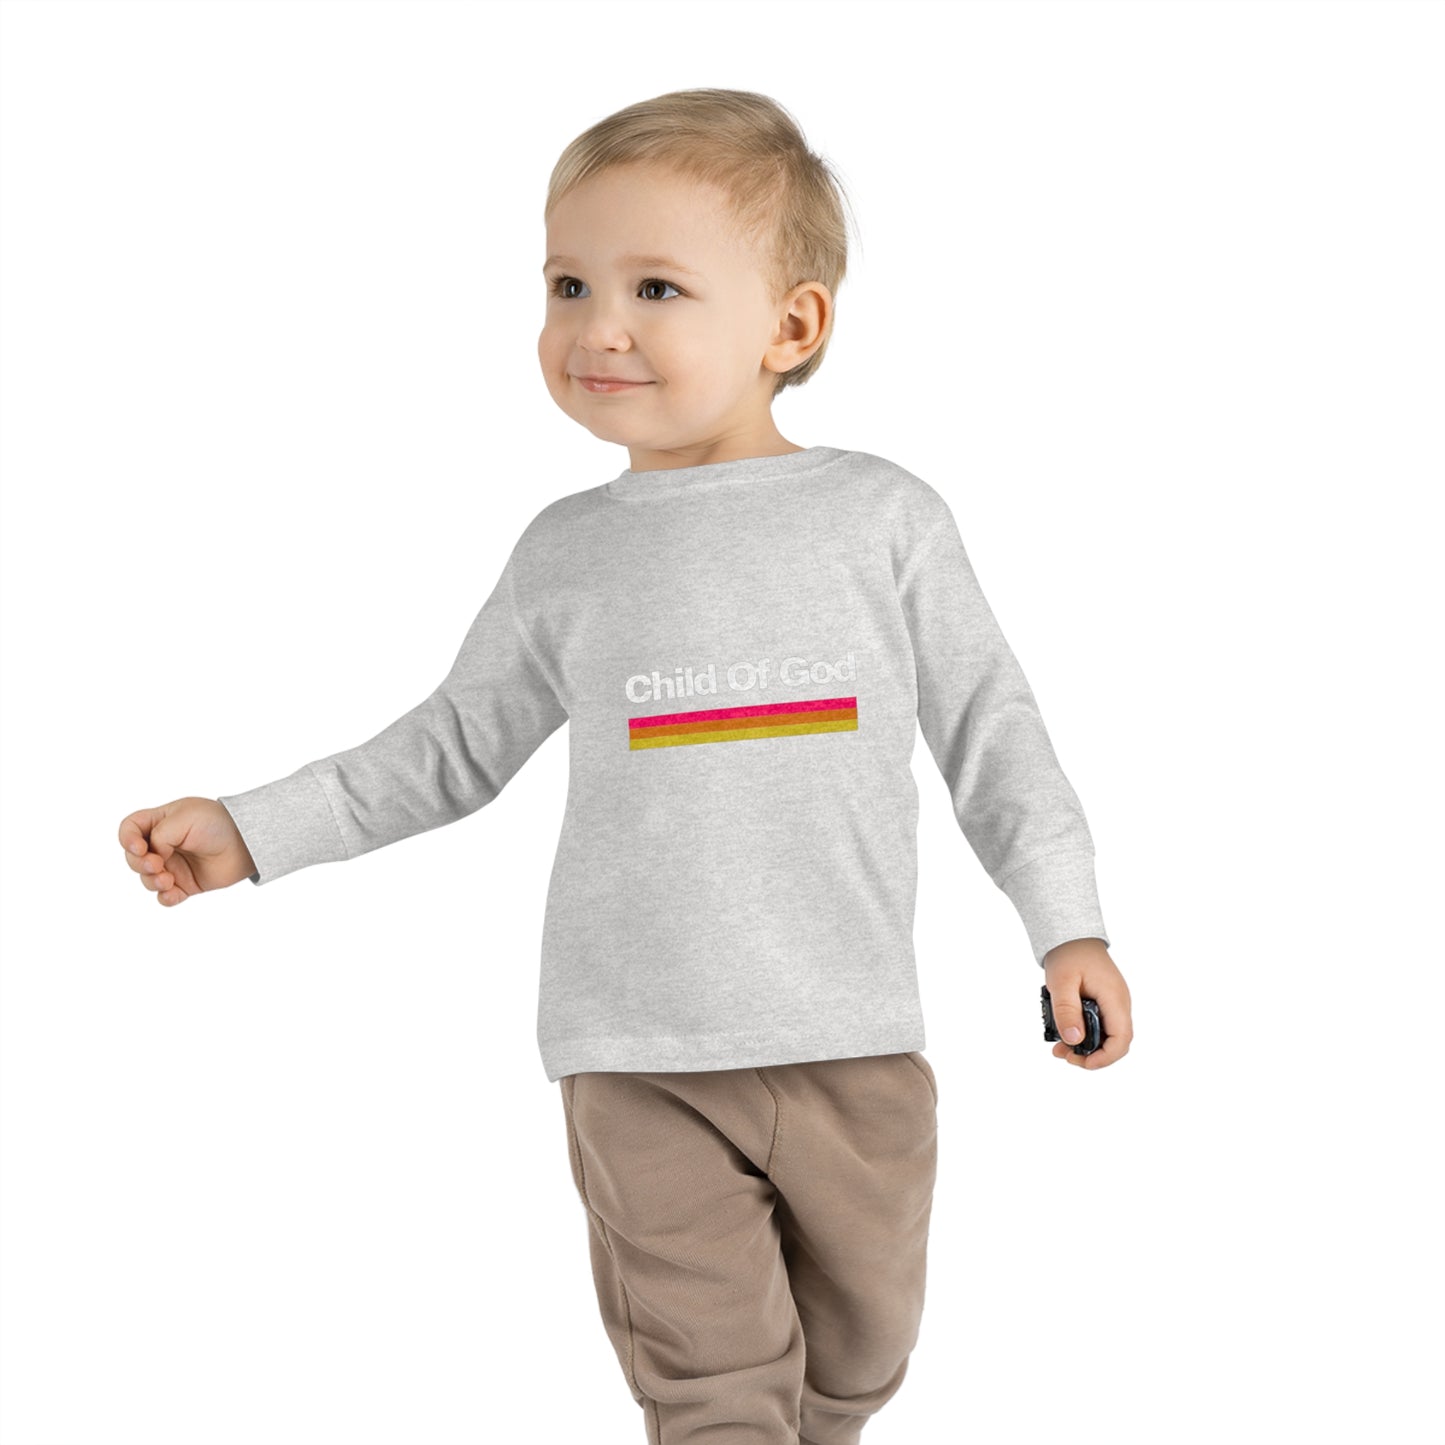 Child Of God  Toddler Christian Sweatshirt Printify